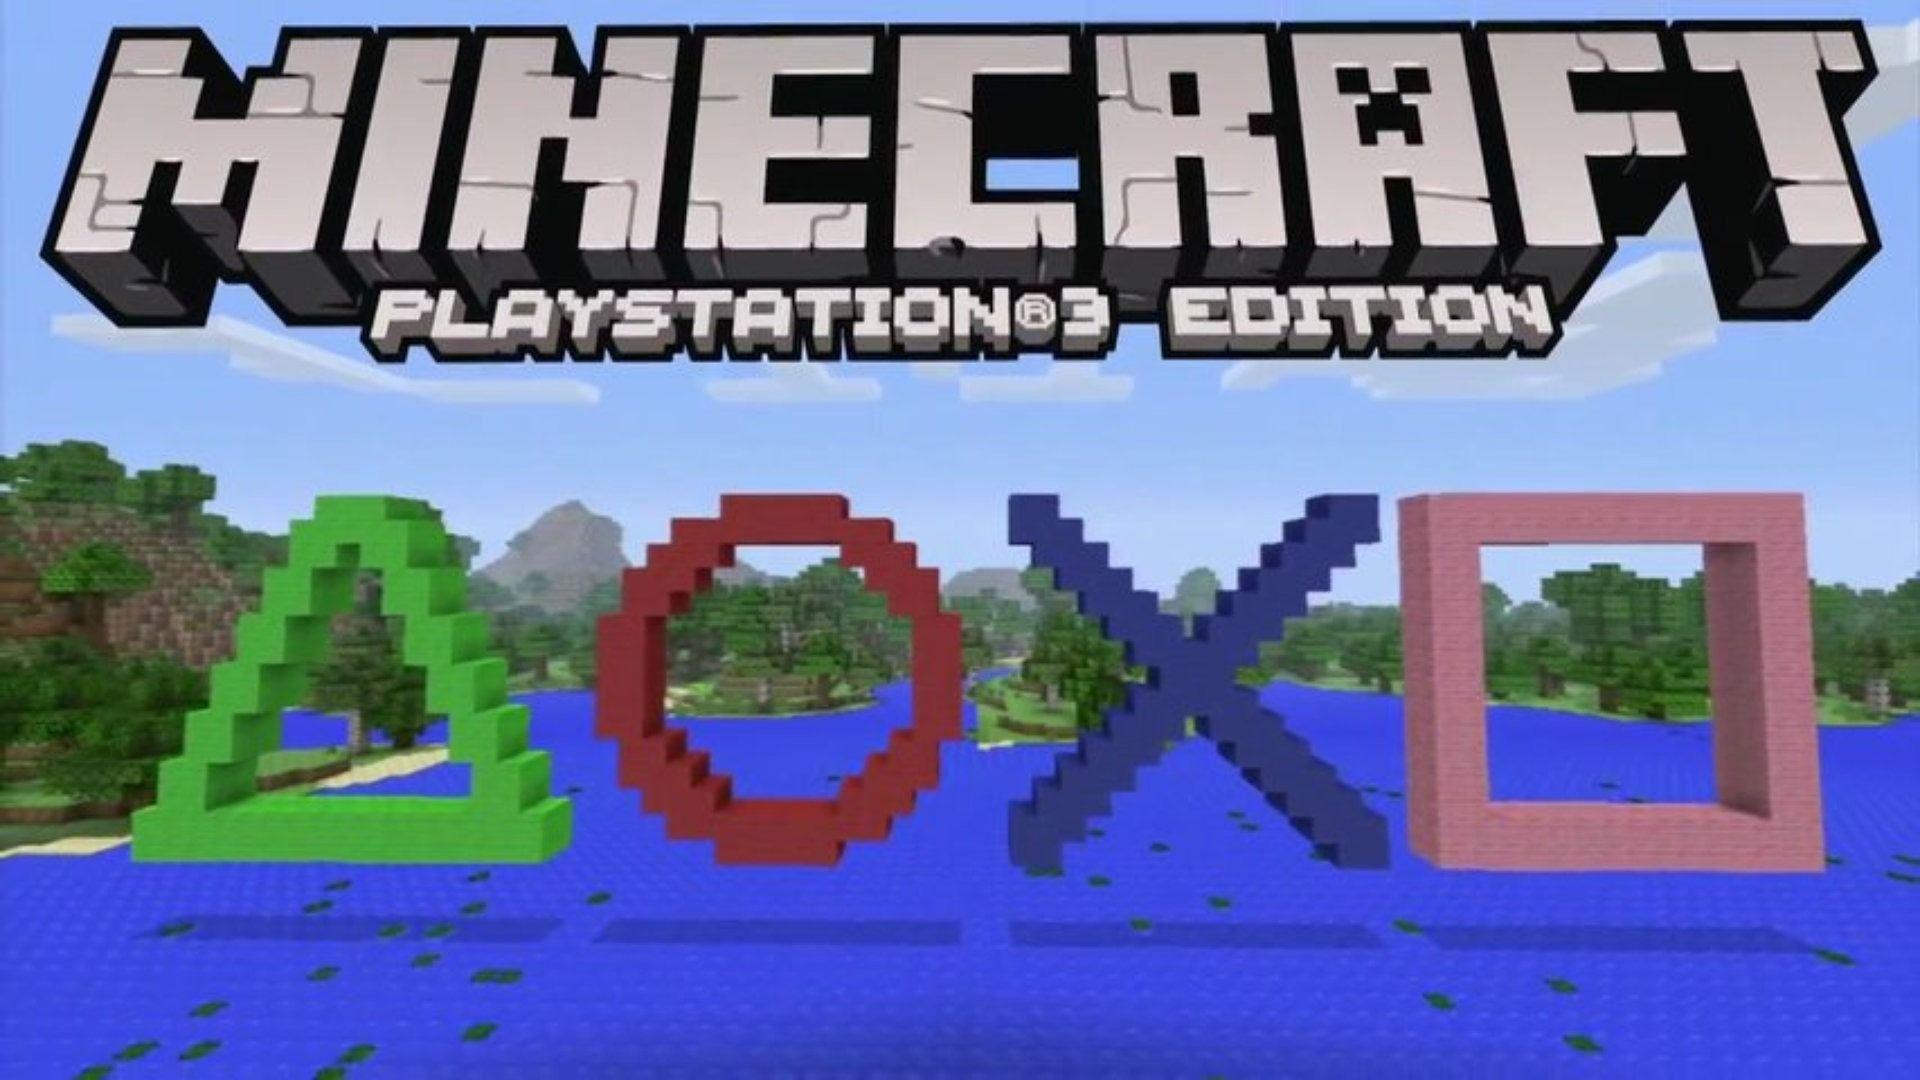 Minecraft- Playstation 3 Edition trailer